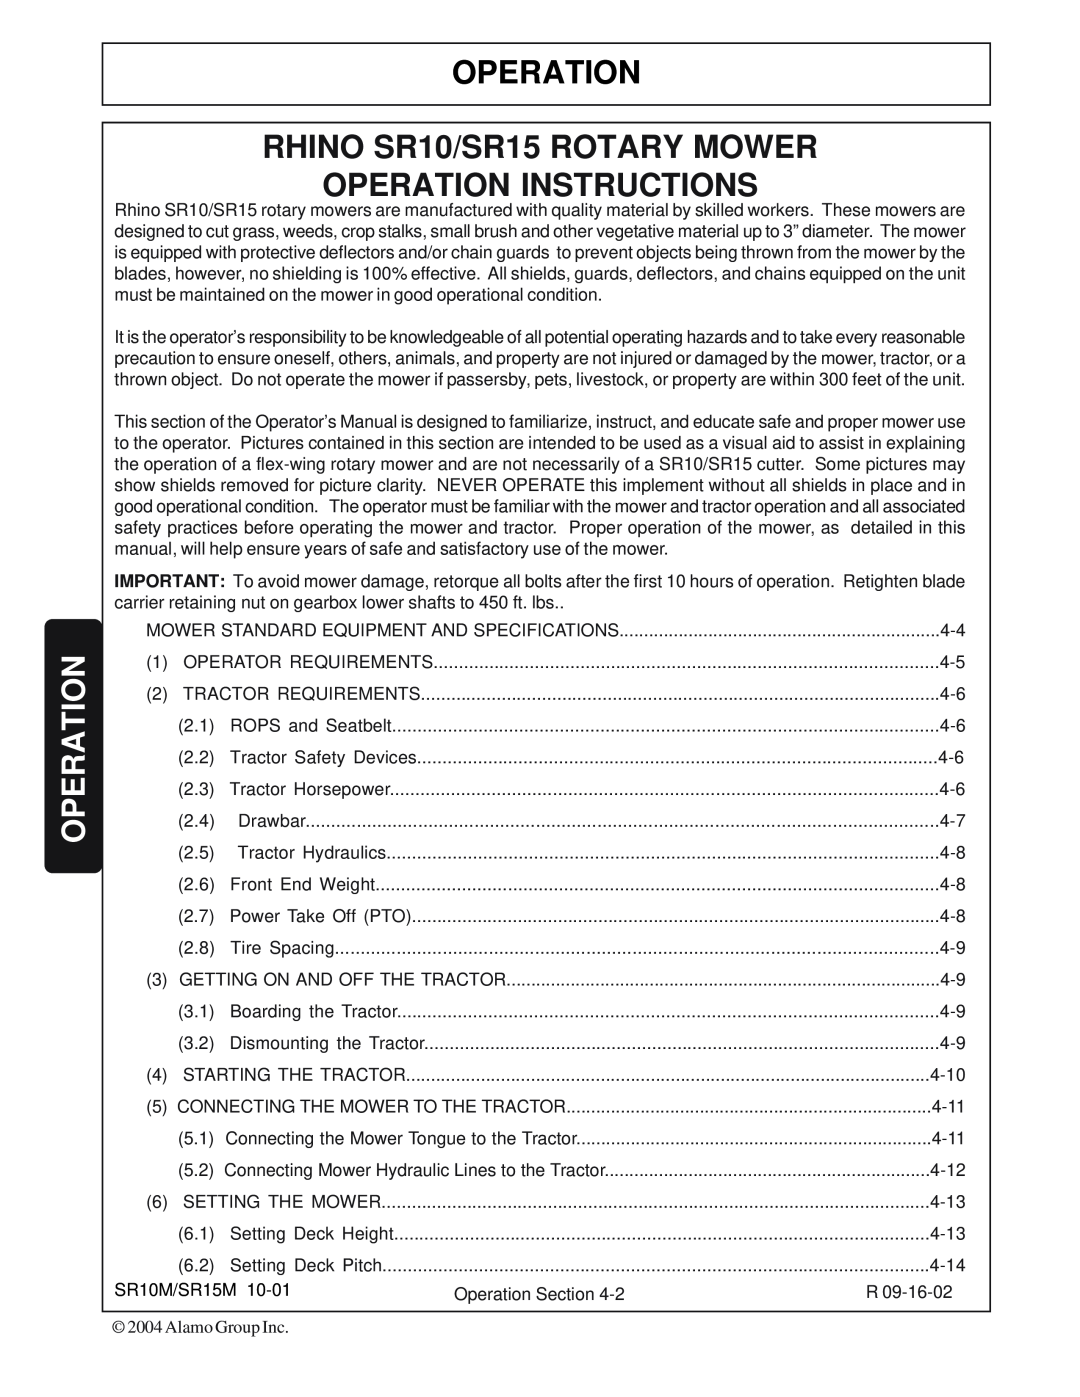 Servis-Rhino SR10M, SR15M manual Operation, OPERATION RHINO SR10/SR15 ROTARY MOWER OPERATION INSTRUCTIONS 